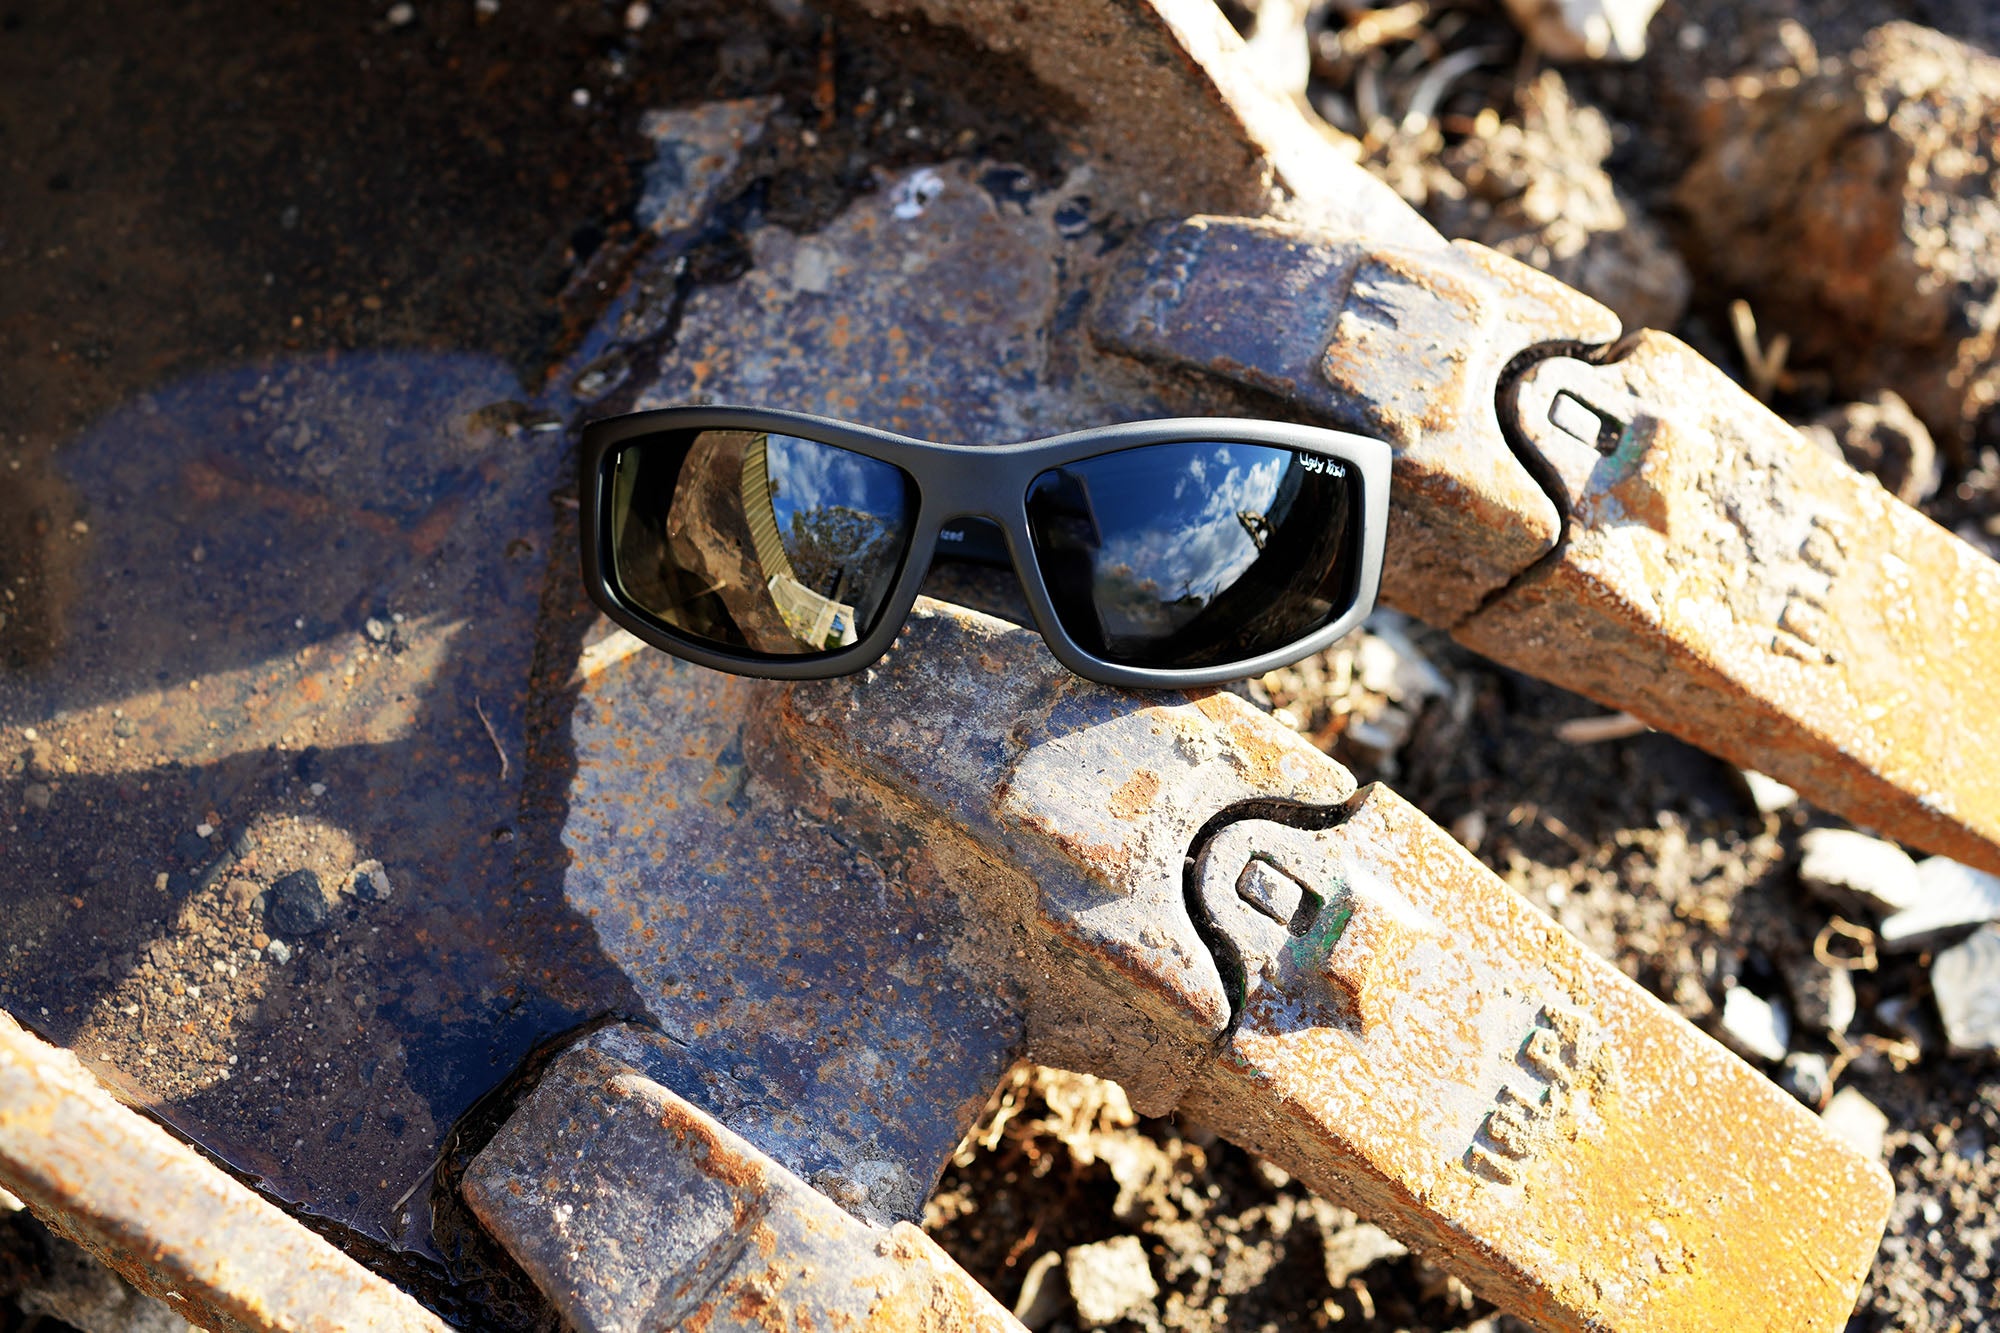 FLX-T Black & Yellow Polarized Sport Sunglasses, Thunder – Piranha Eyewear